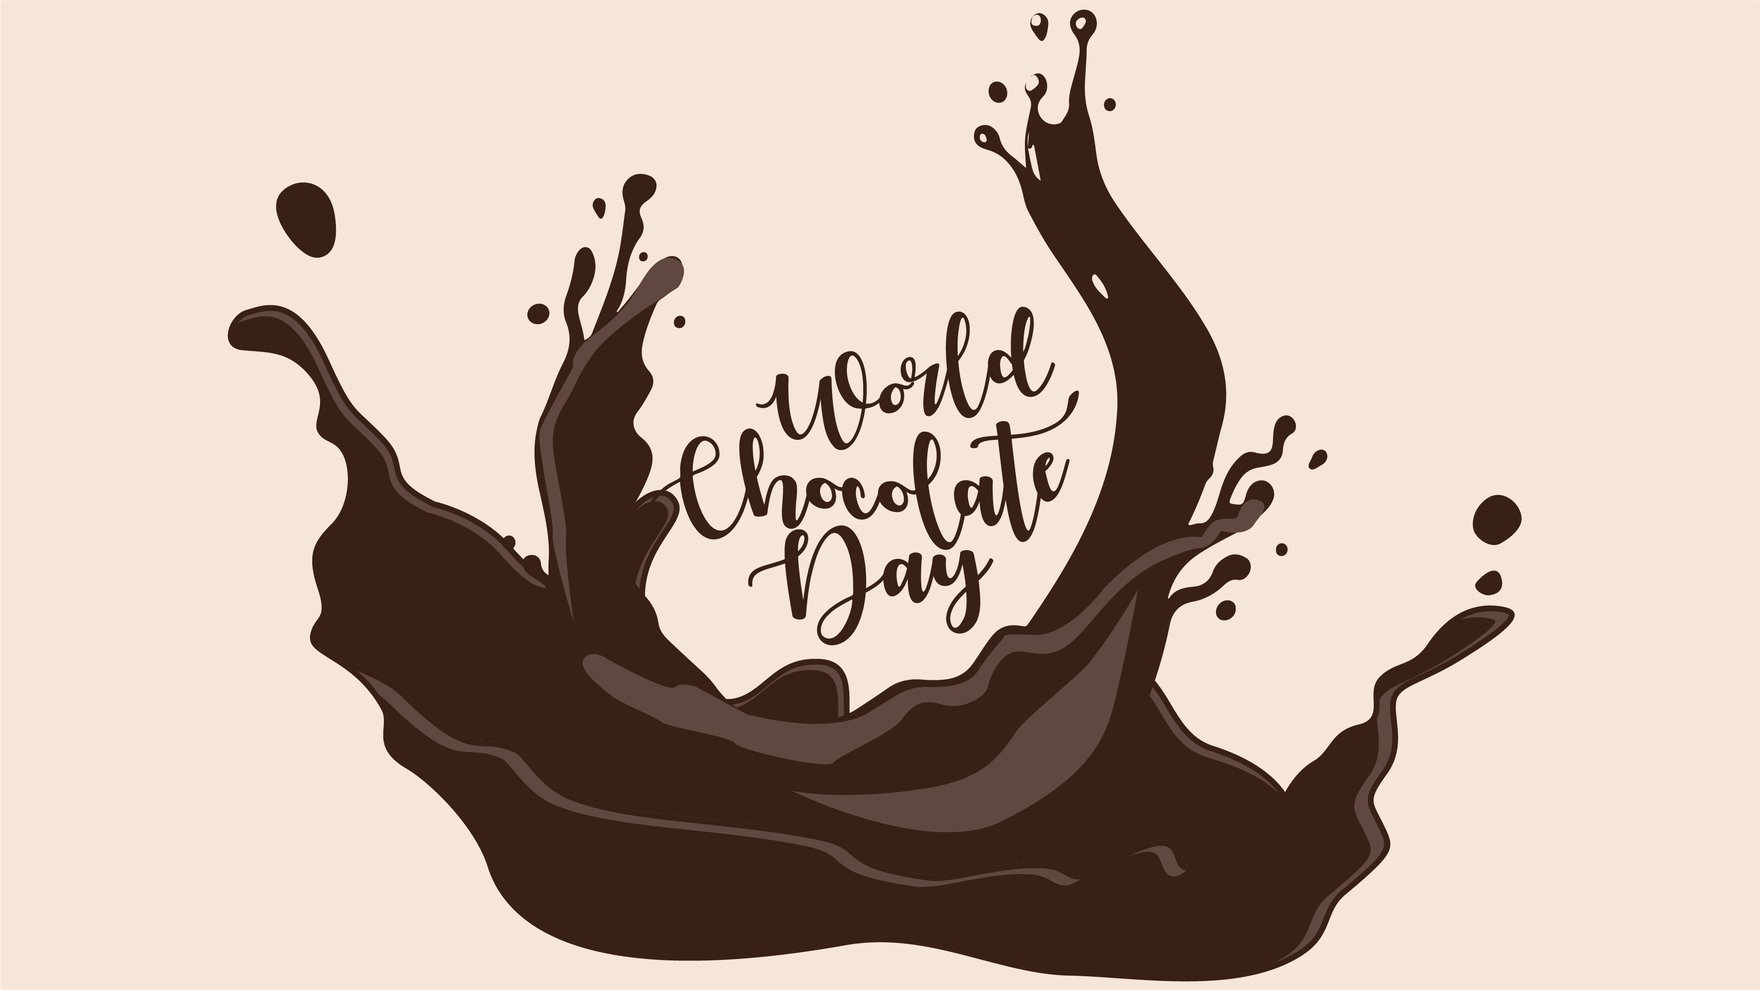 Happy International Chocolate Day Background